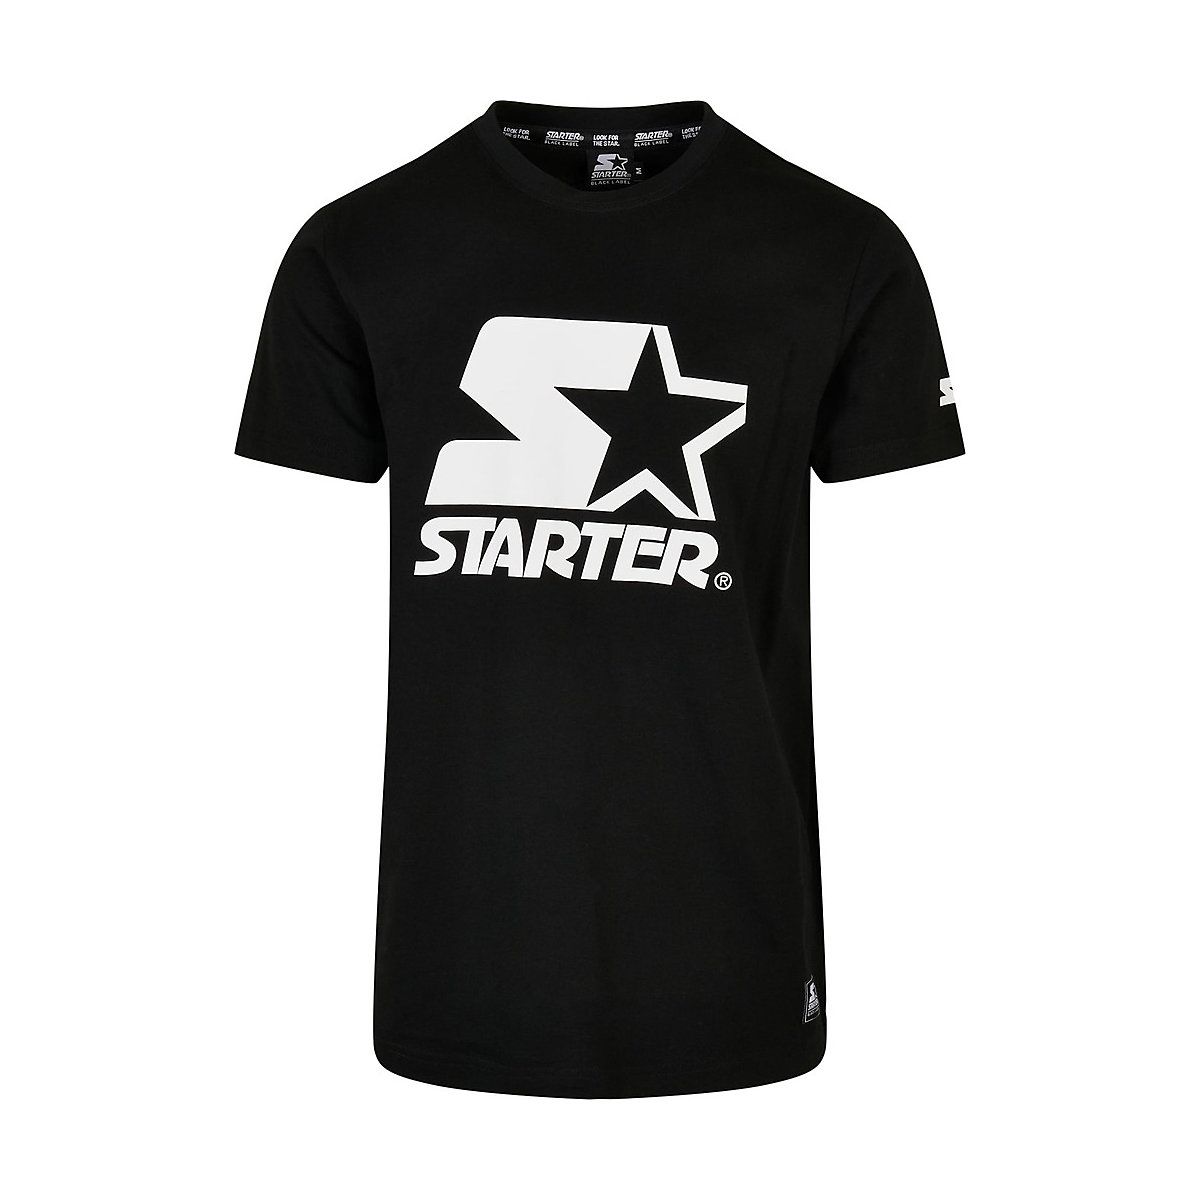 STARTER® BLACK LABEL Starter Black Label Logo Tee Black schwarz